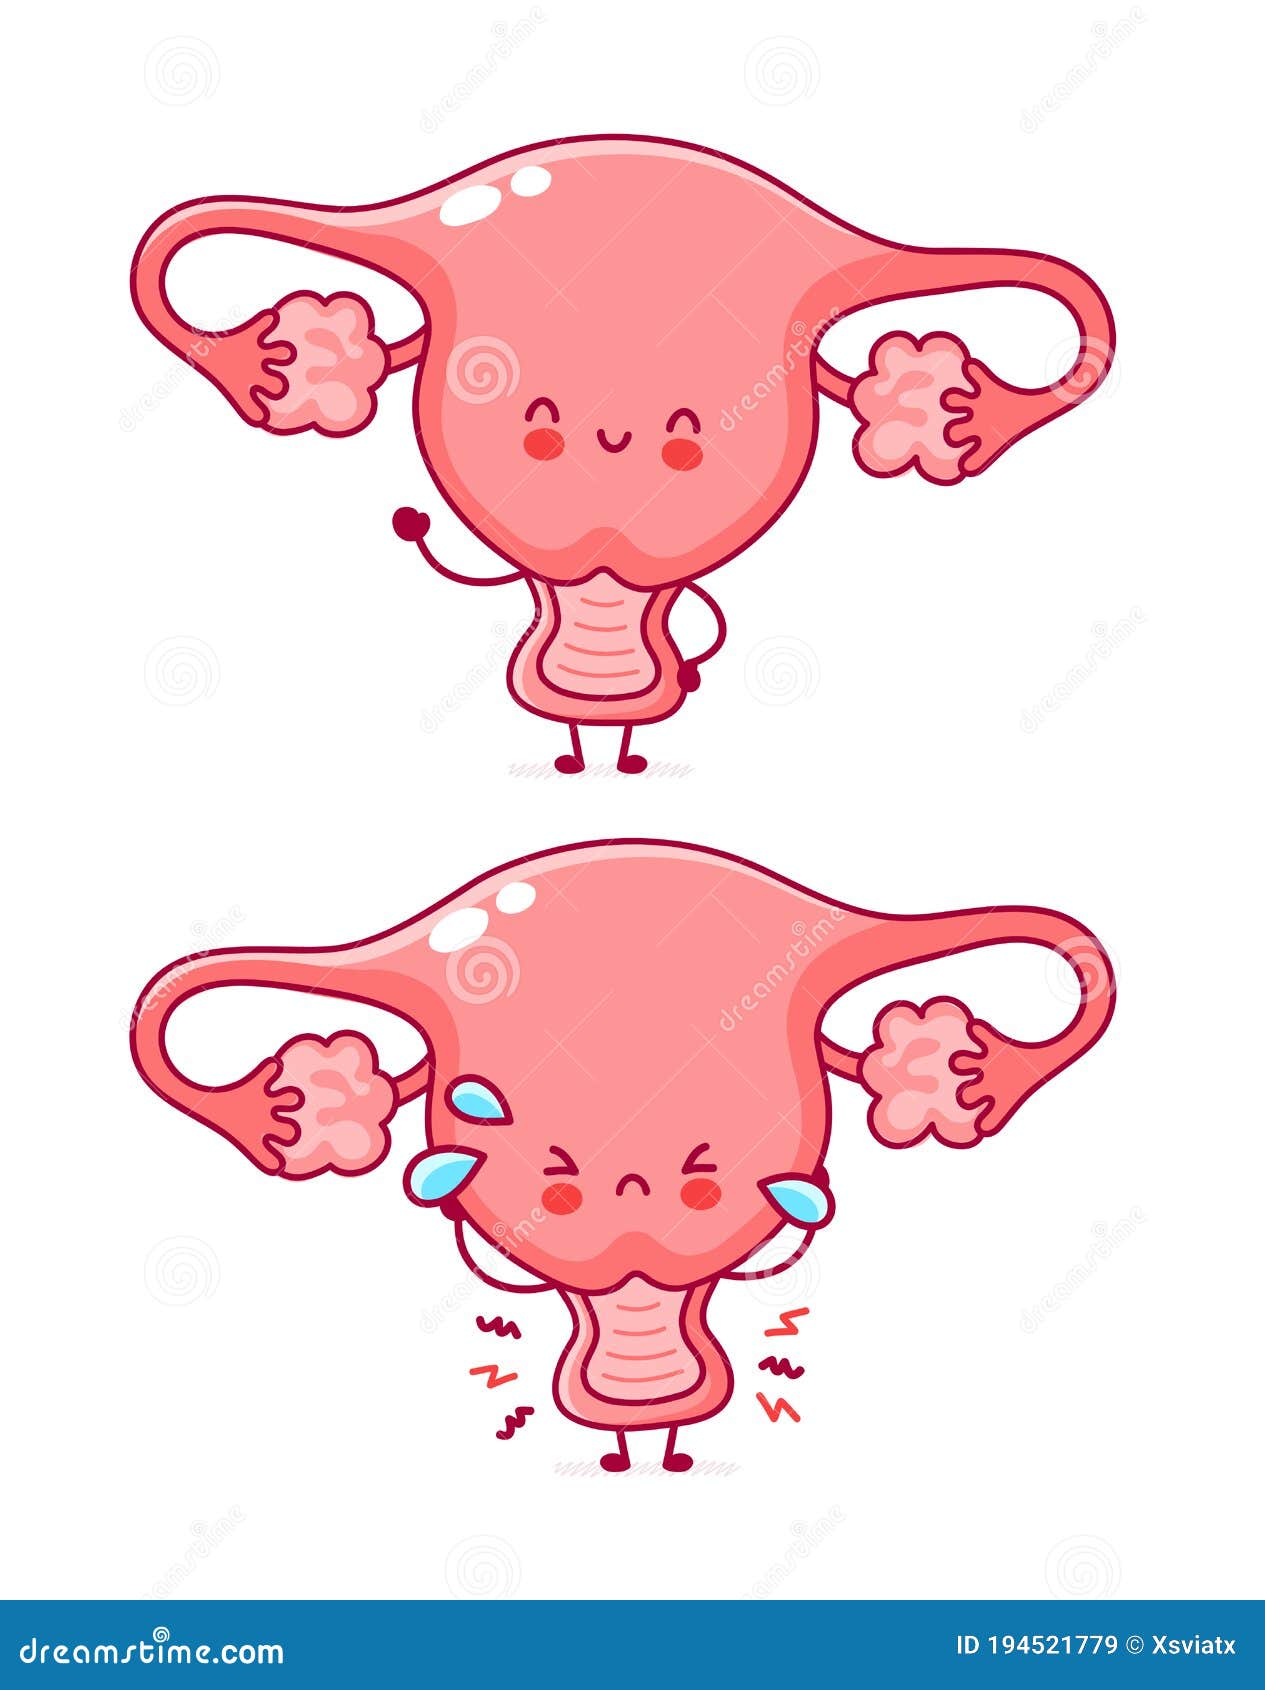 Woman Uterus With Flowers Illustration Cartoon Vector | CartoonDealer ...